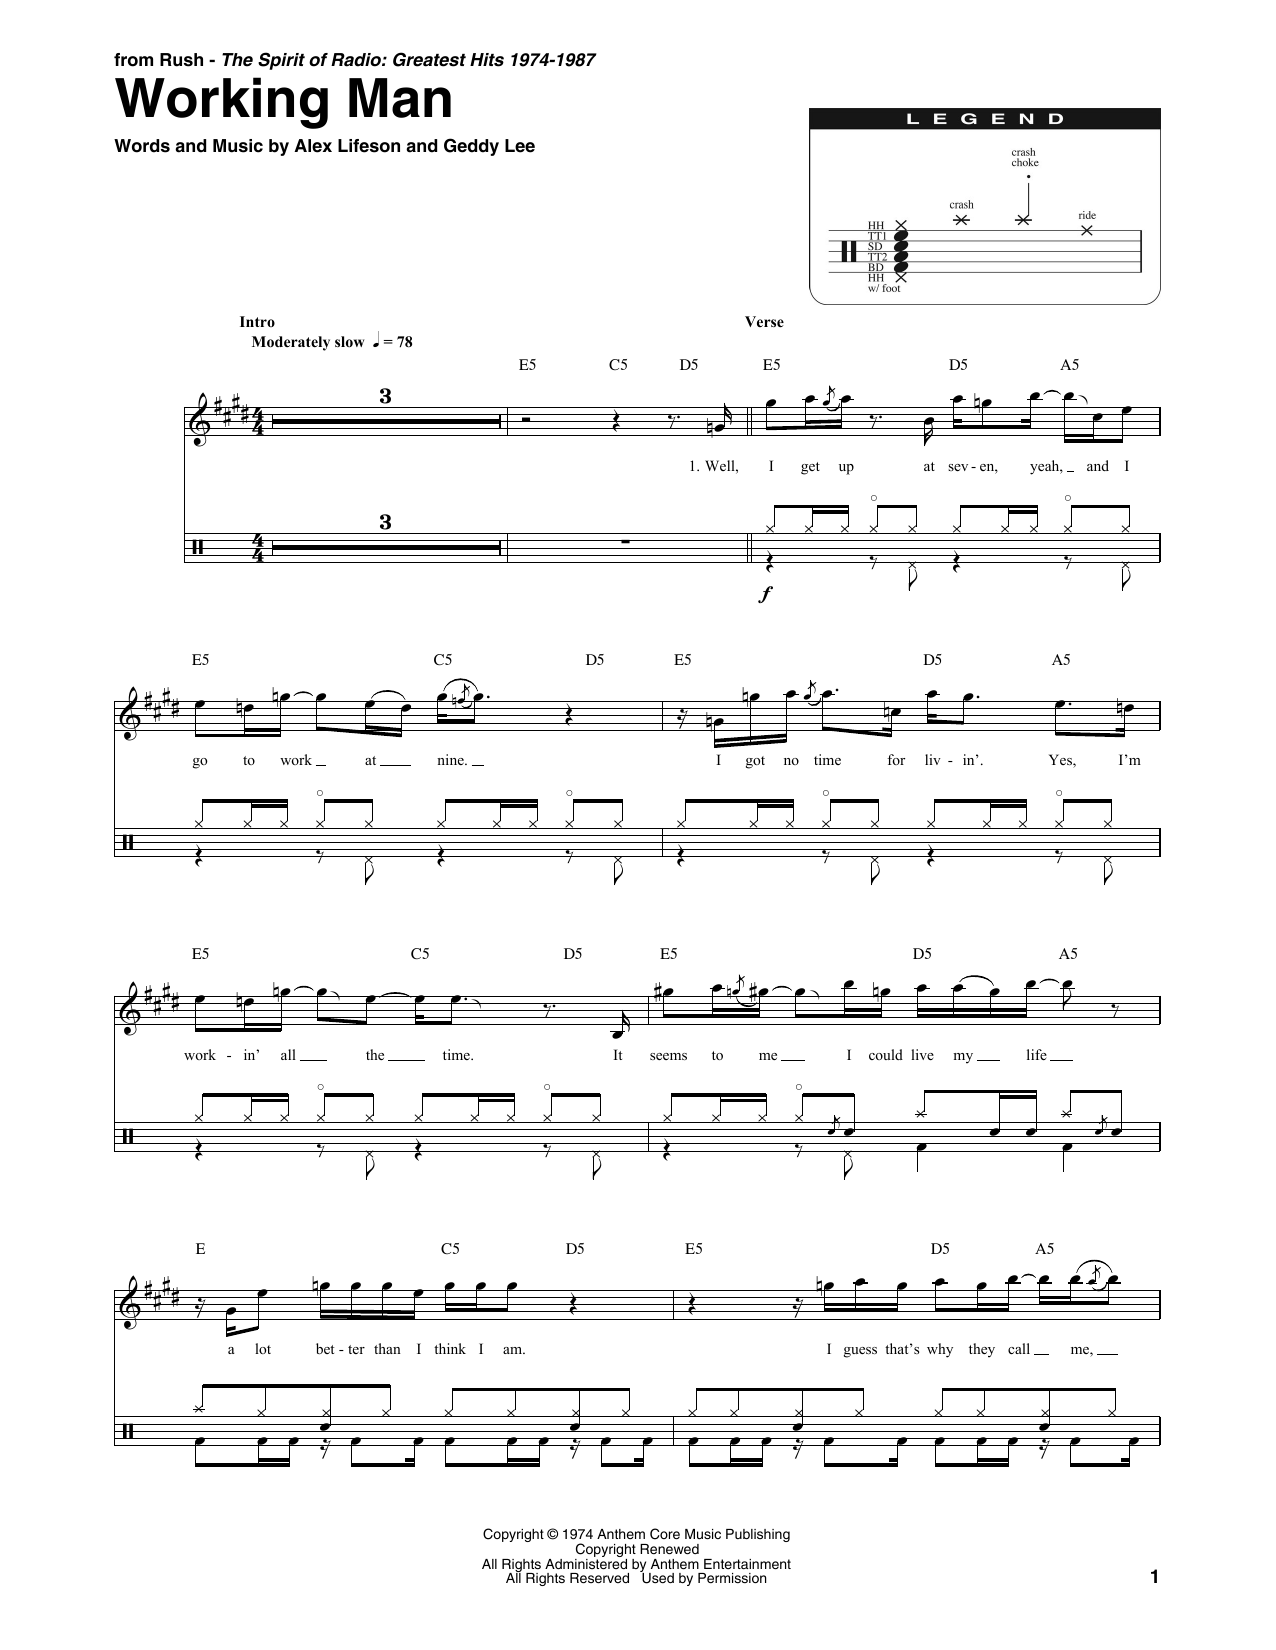 Rush Working Man Sheet Music Notes & Chords for Guitar Tab - Download or Print PDF